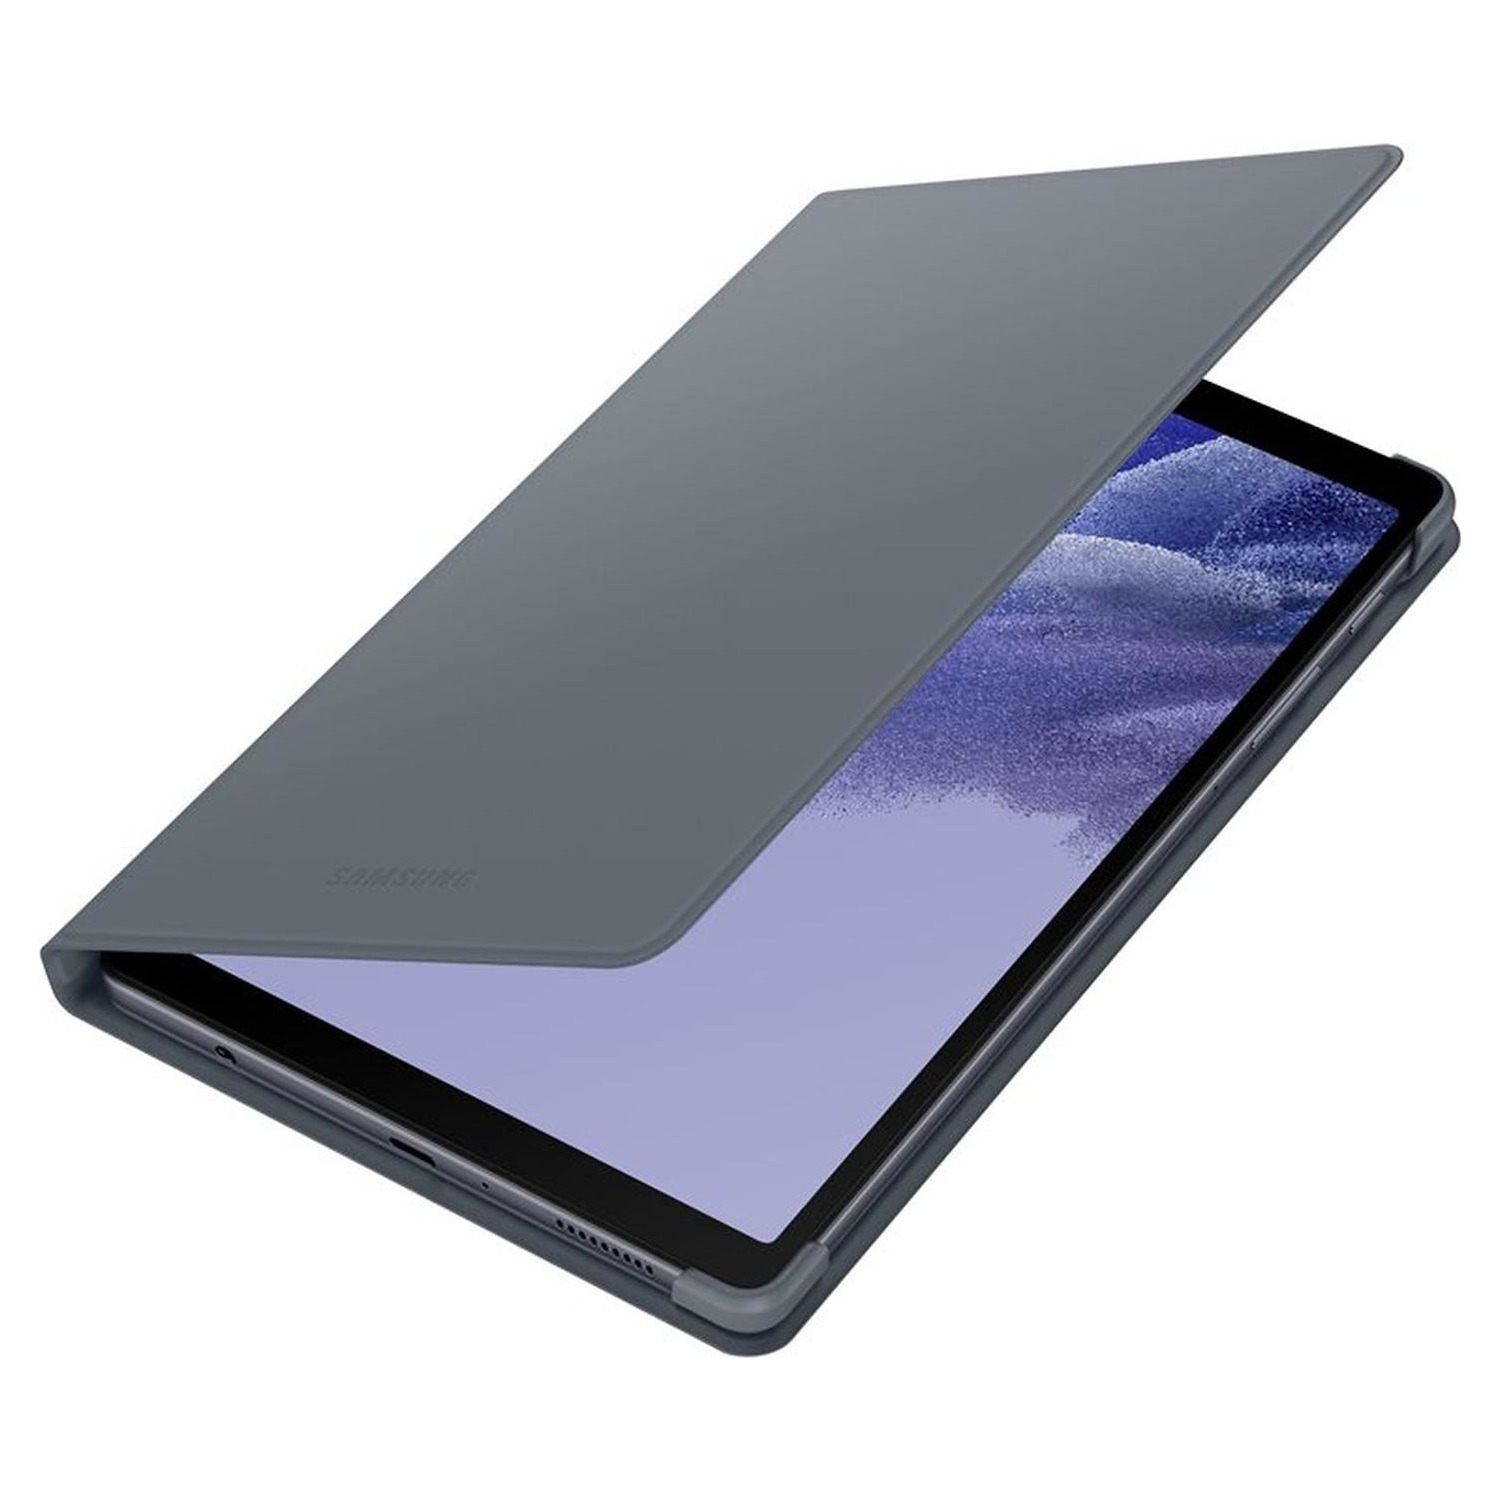 Immagine per Book cover Samsung per Tablet A7 lite grigia da DIMOStore